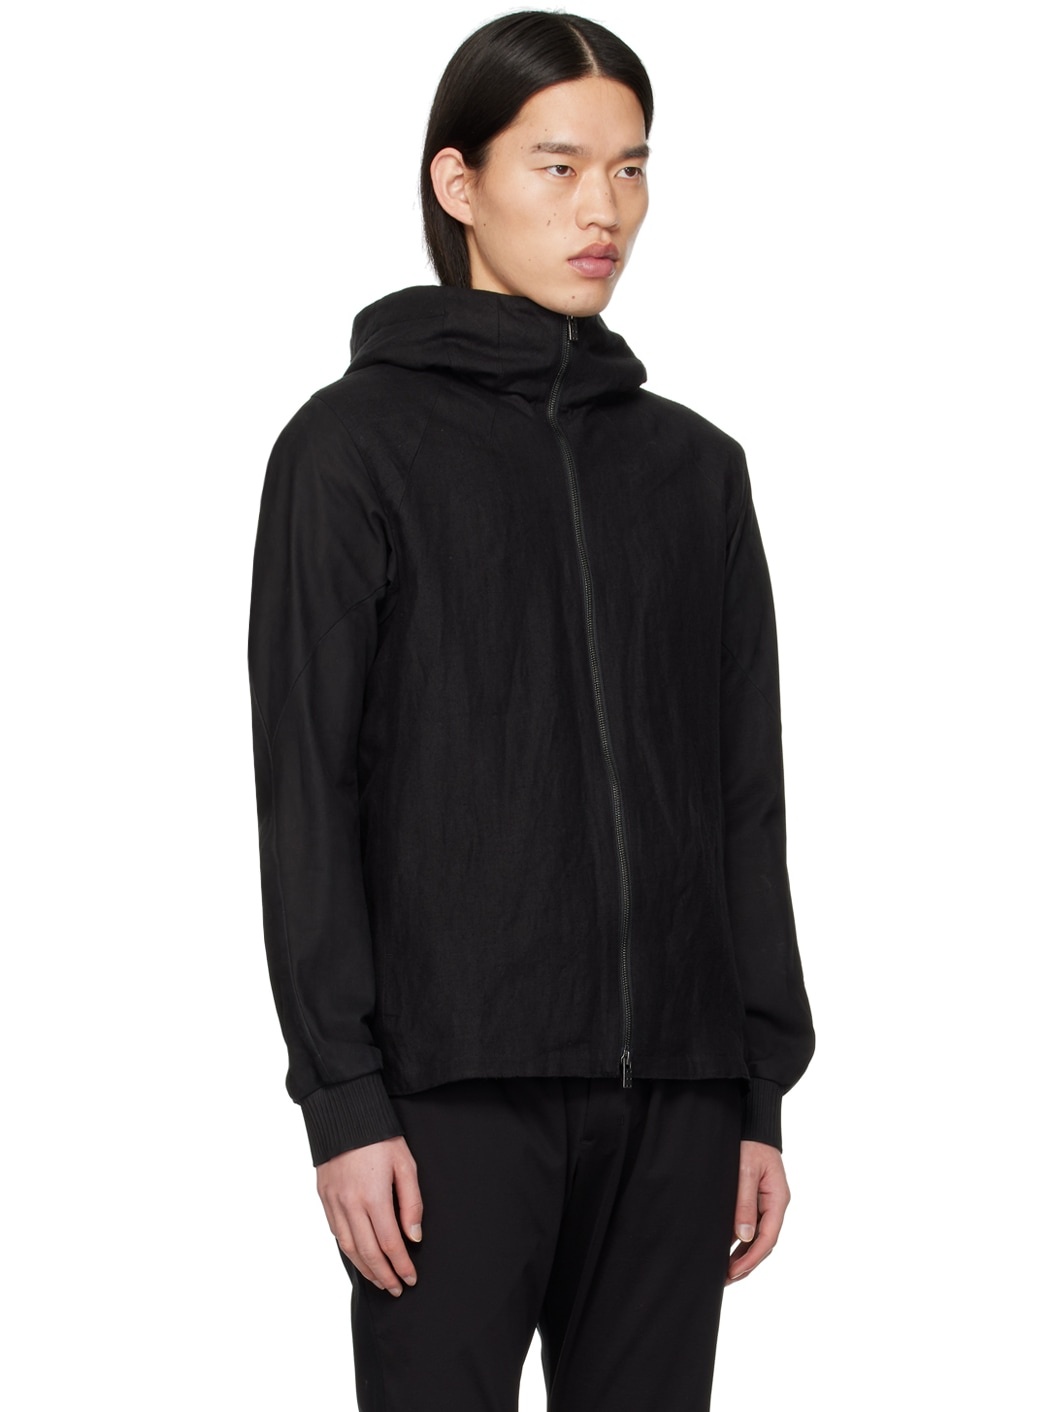 Black Hooded Leather Jacket - 2